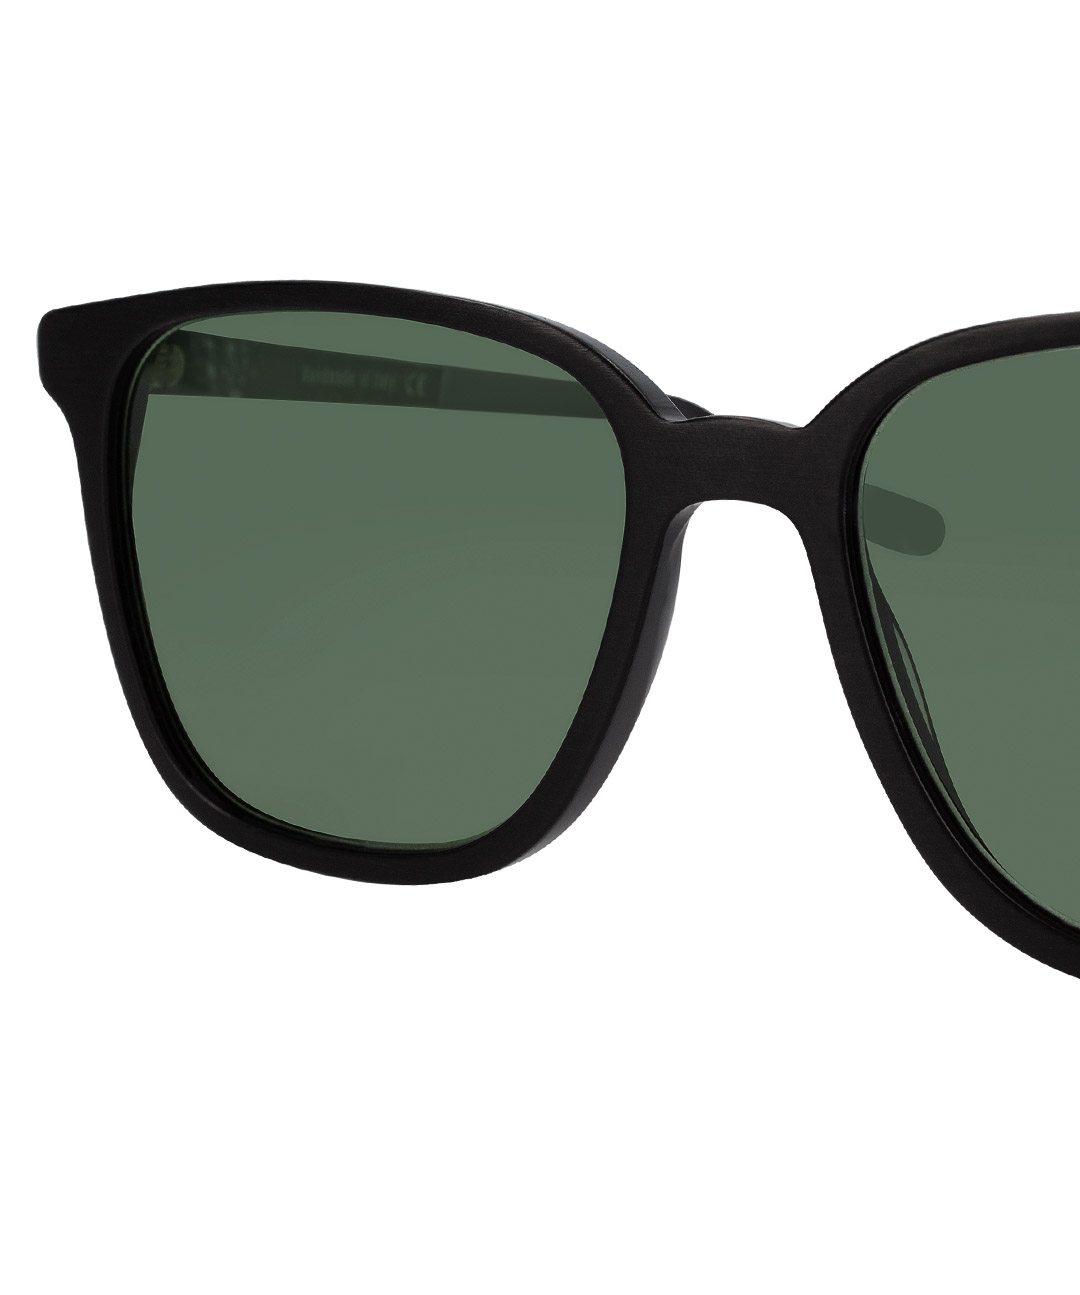 Sonnenbrille Boxhagener Black Matte Designs Lilienthal | Preisgekrönte Green Berlin 